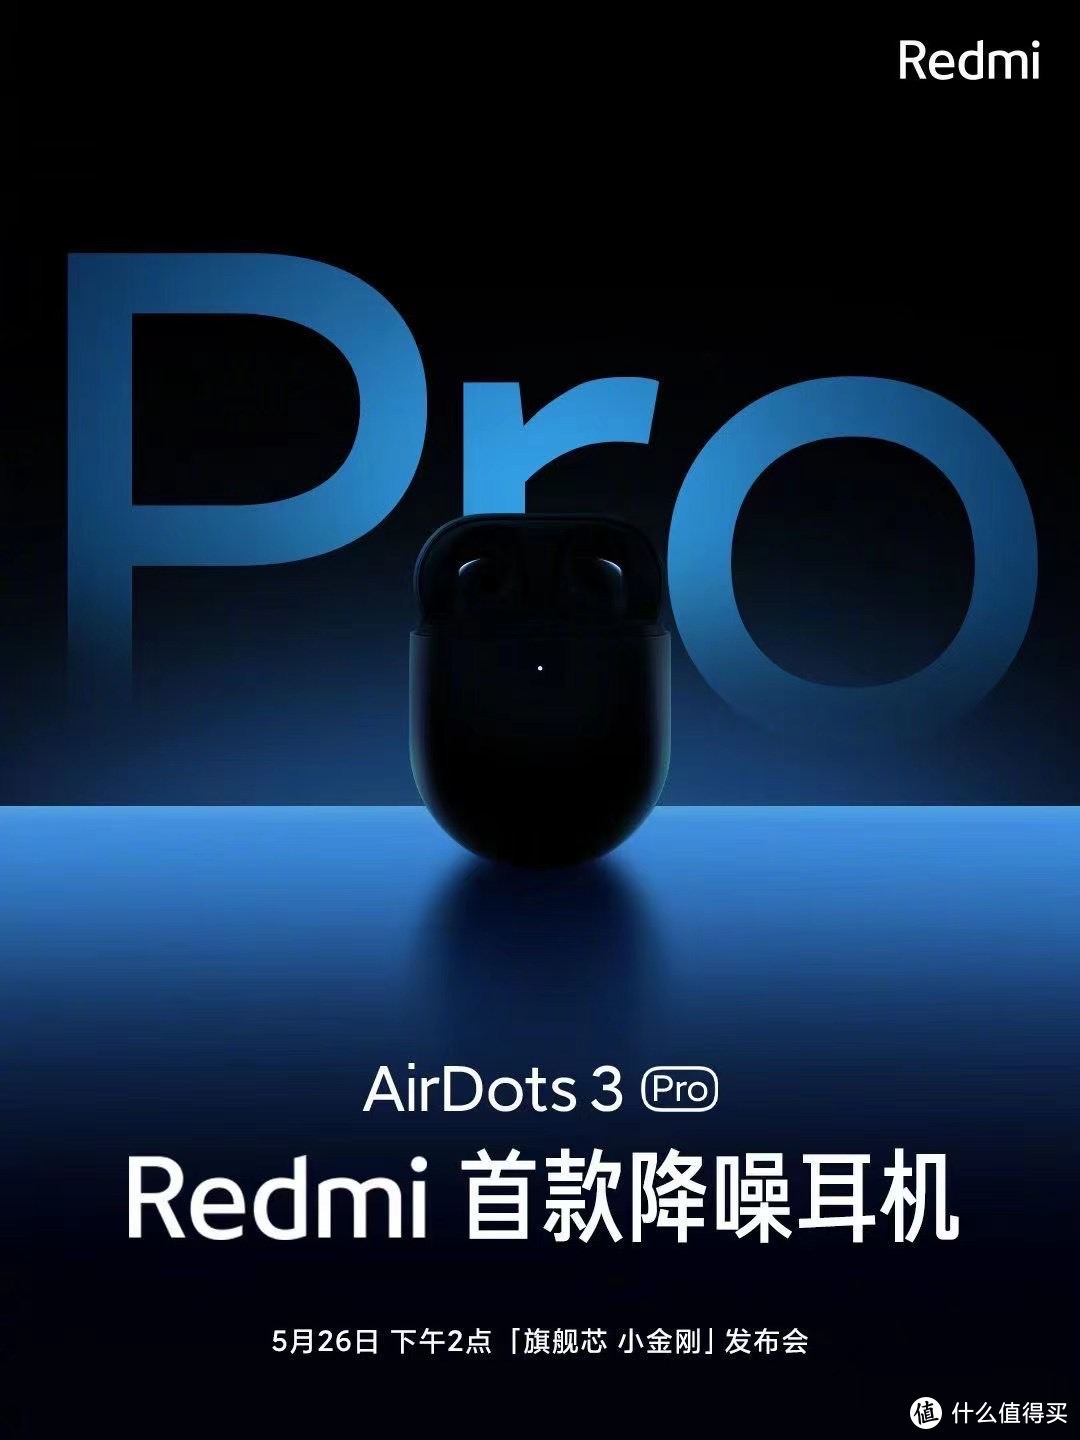 Redmi红米首款降噪耳机AirDots 3 Pro官宣，外观质感，功能、性能全方位升级